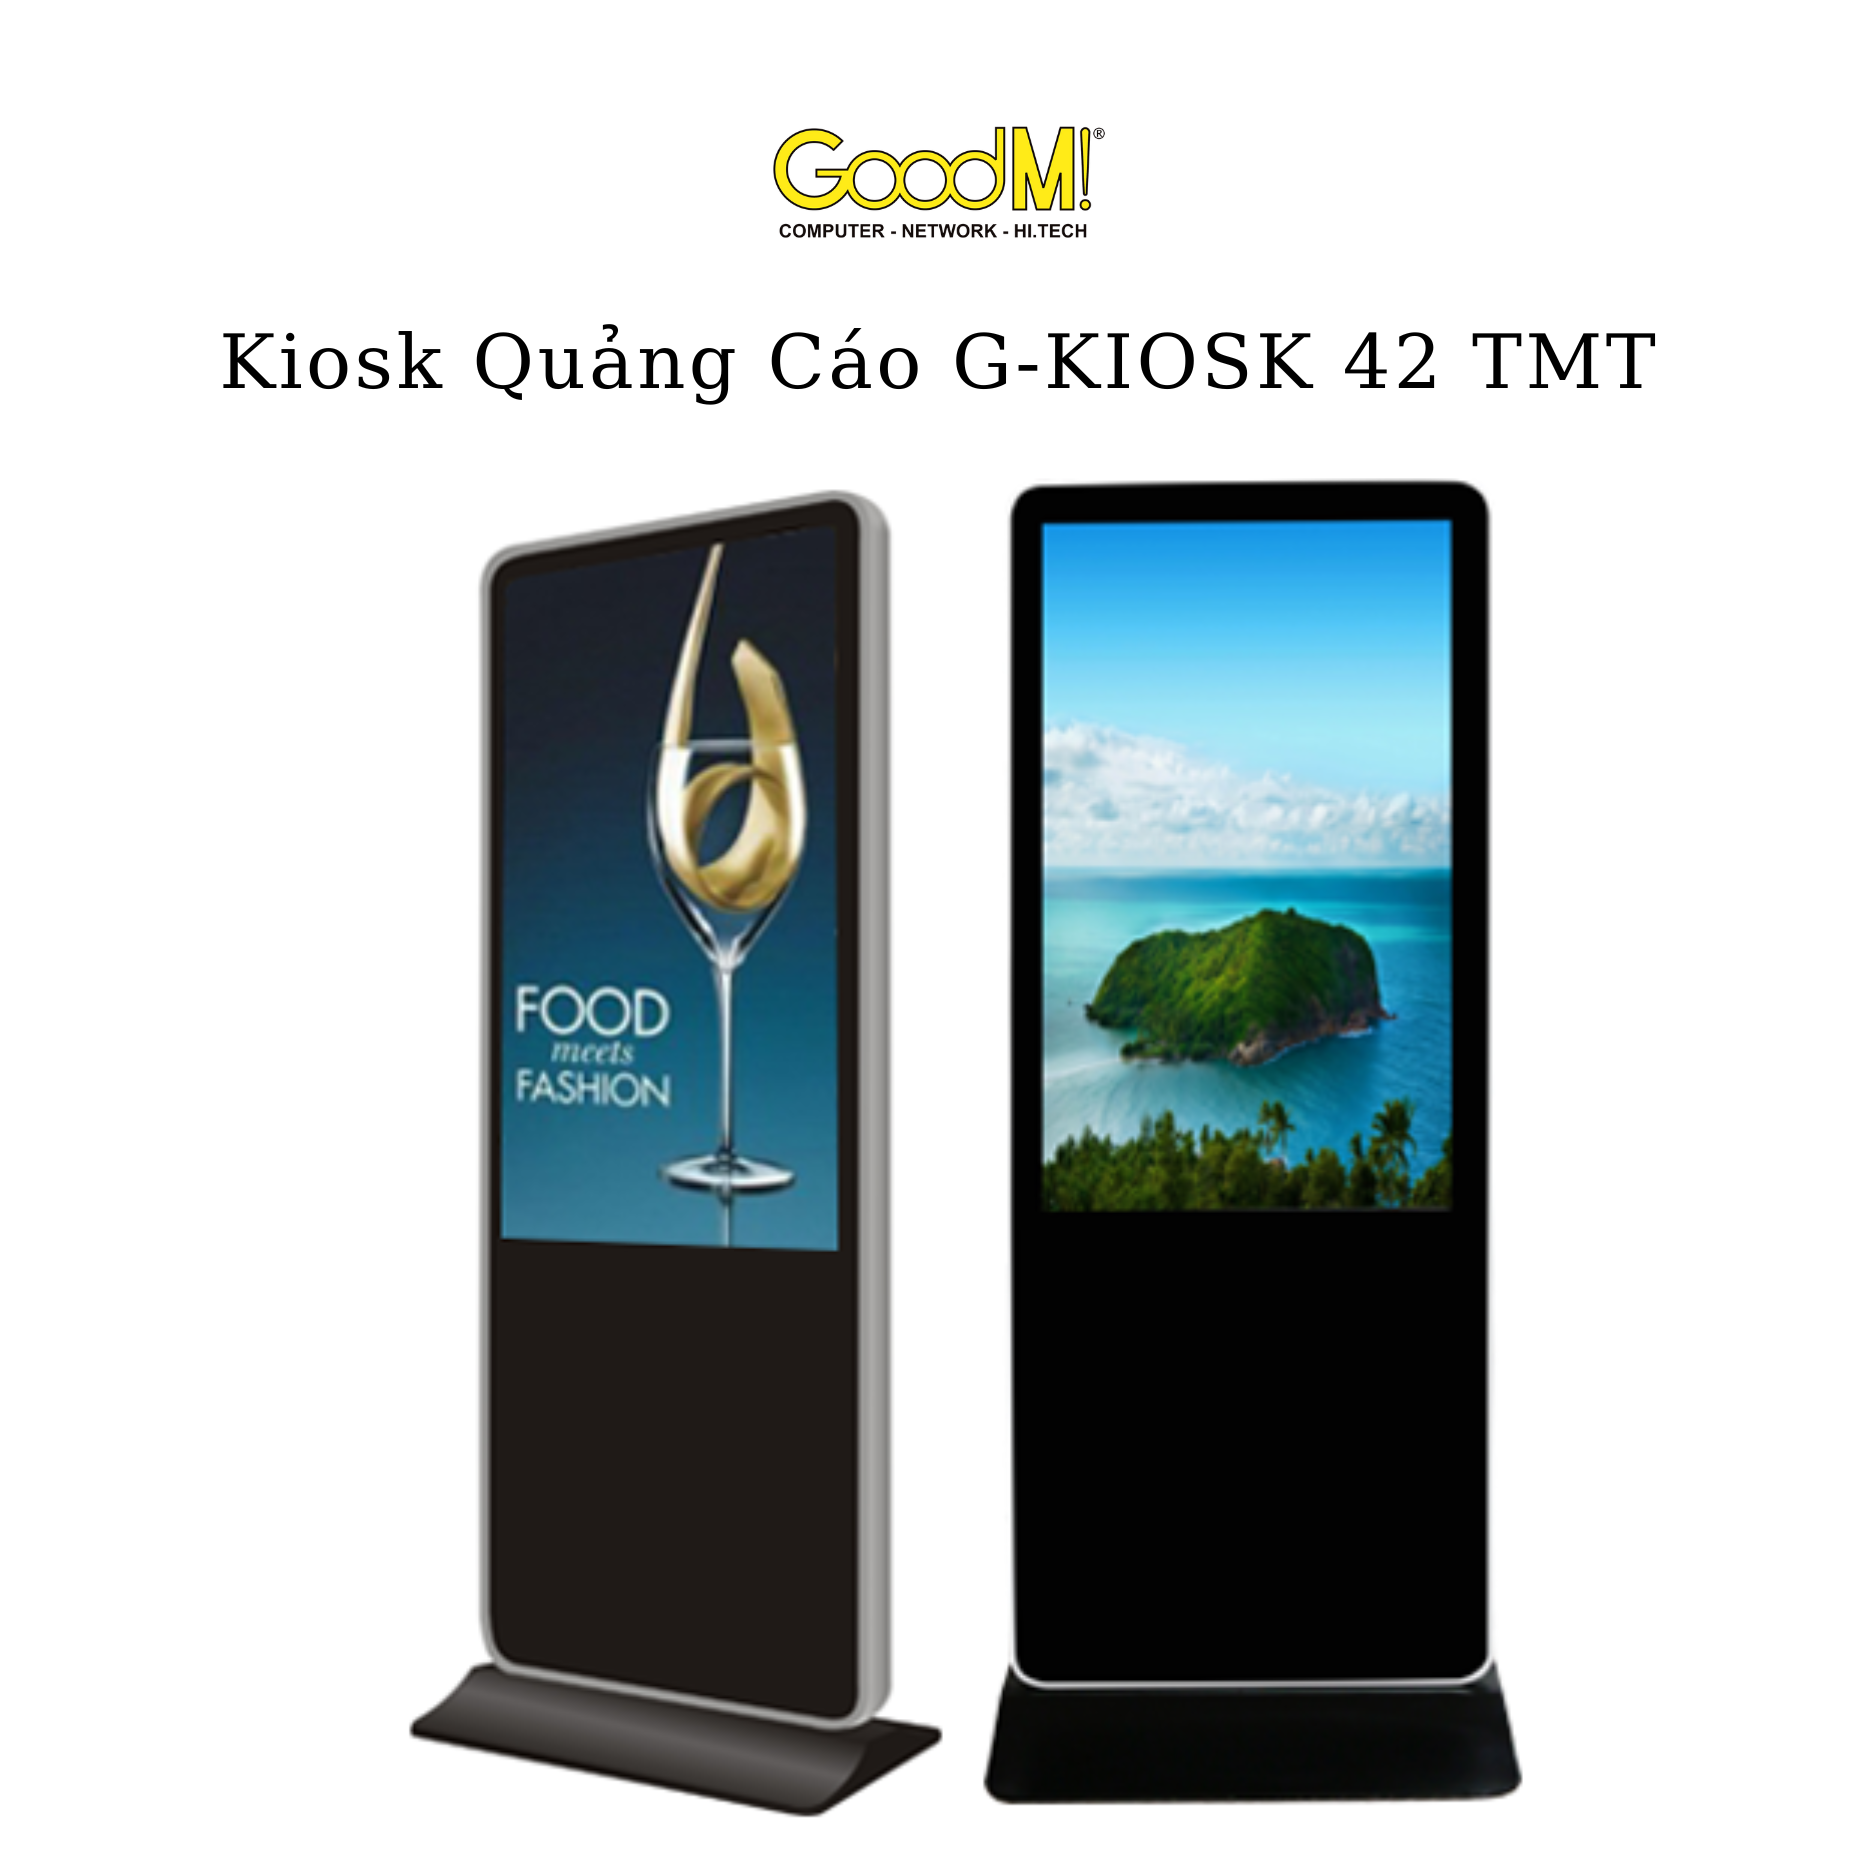  Kiosk Quảng Cáo G-KIOSK 42 TMT 